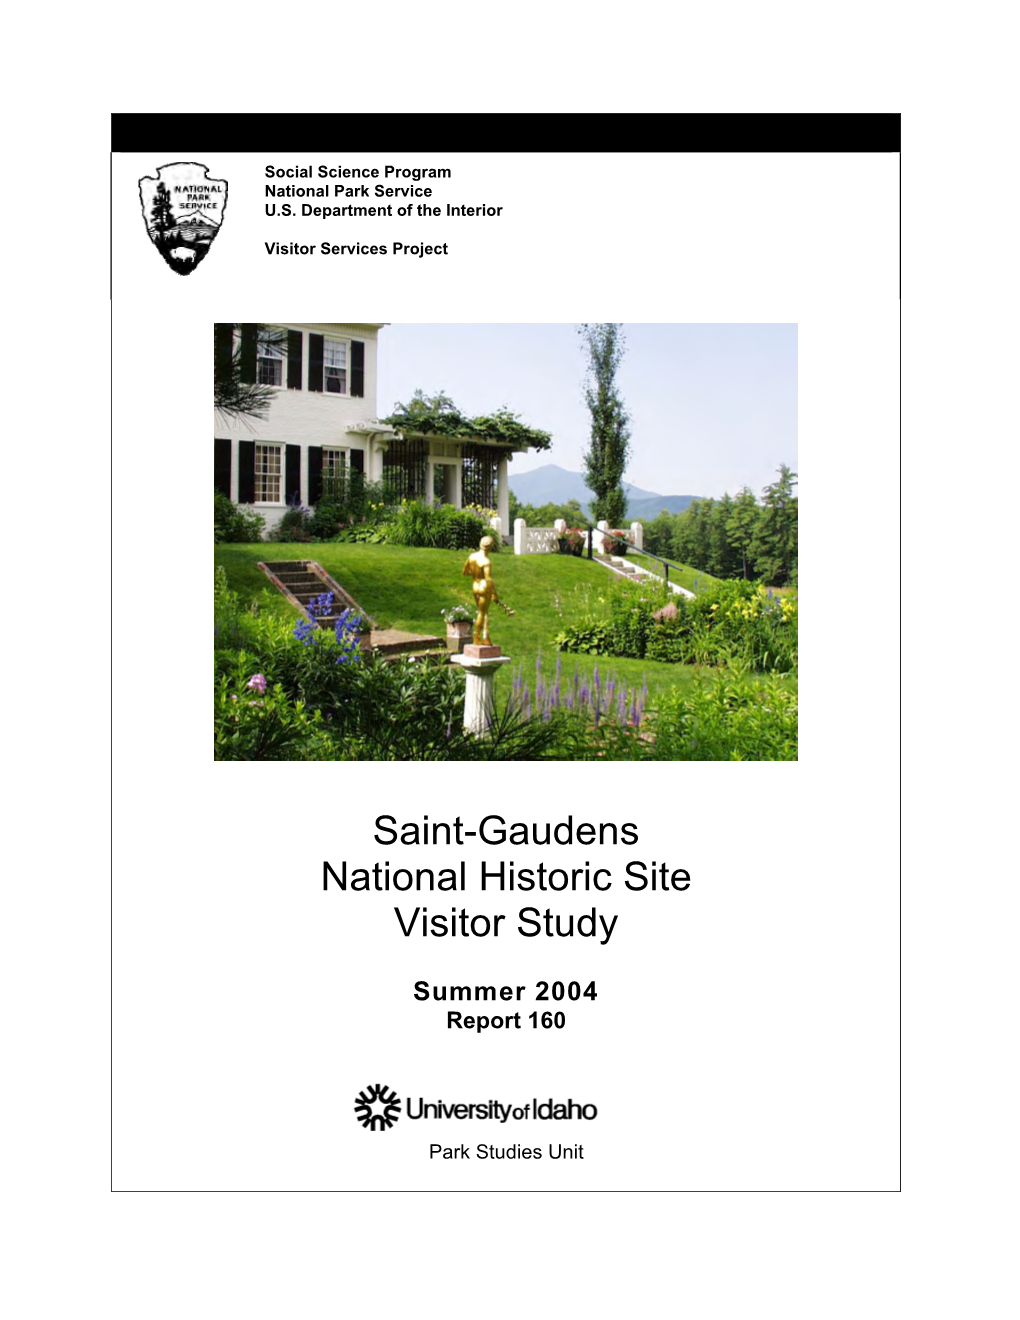 Saint-Gaudens National Historic Site Visitor Study